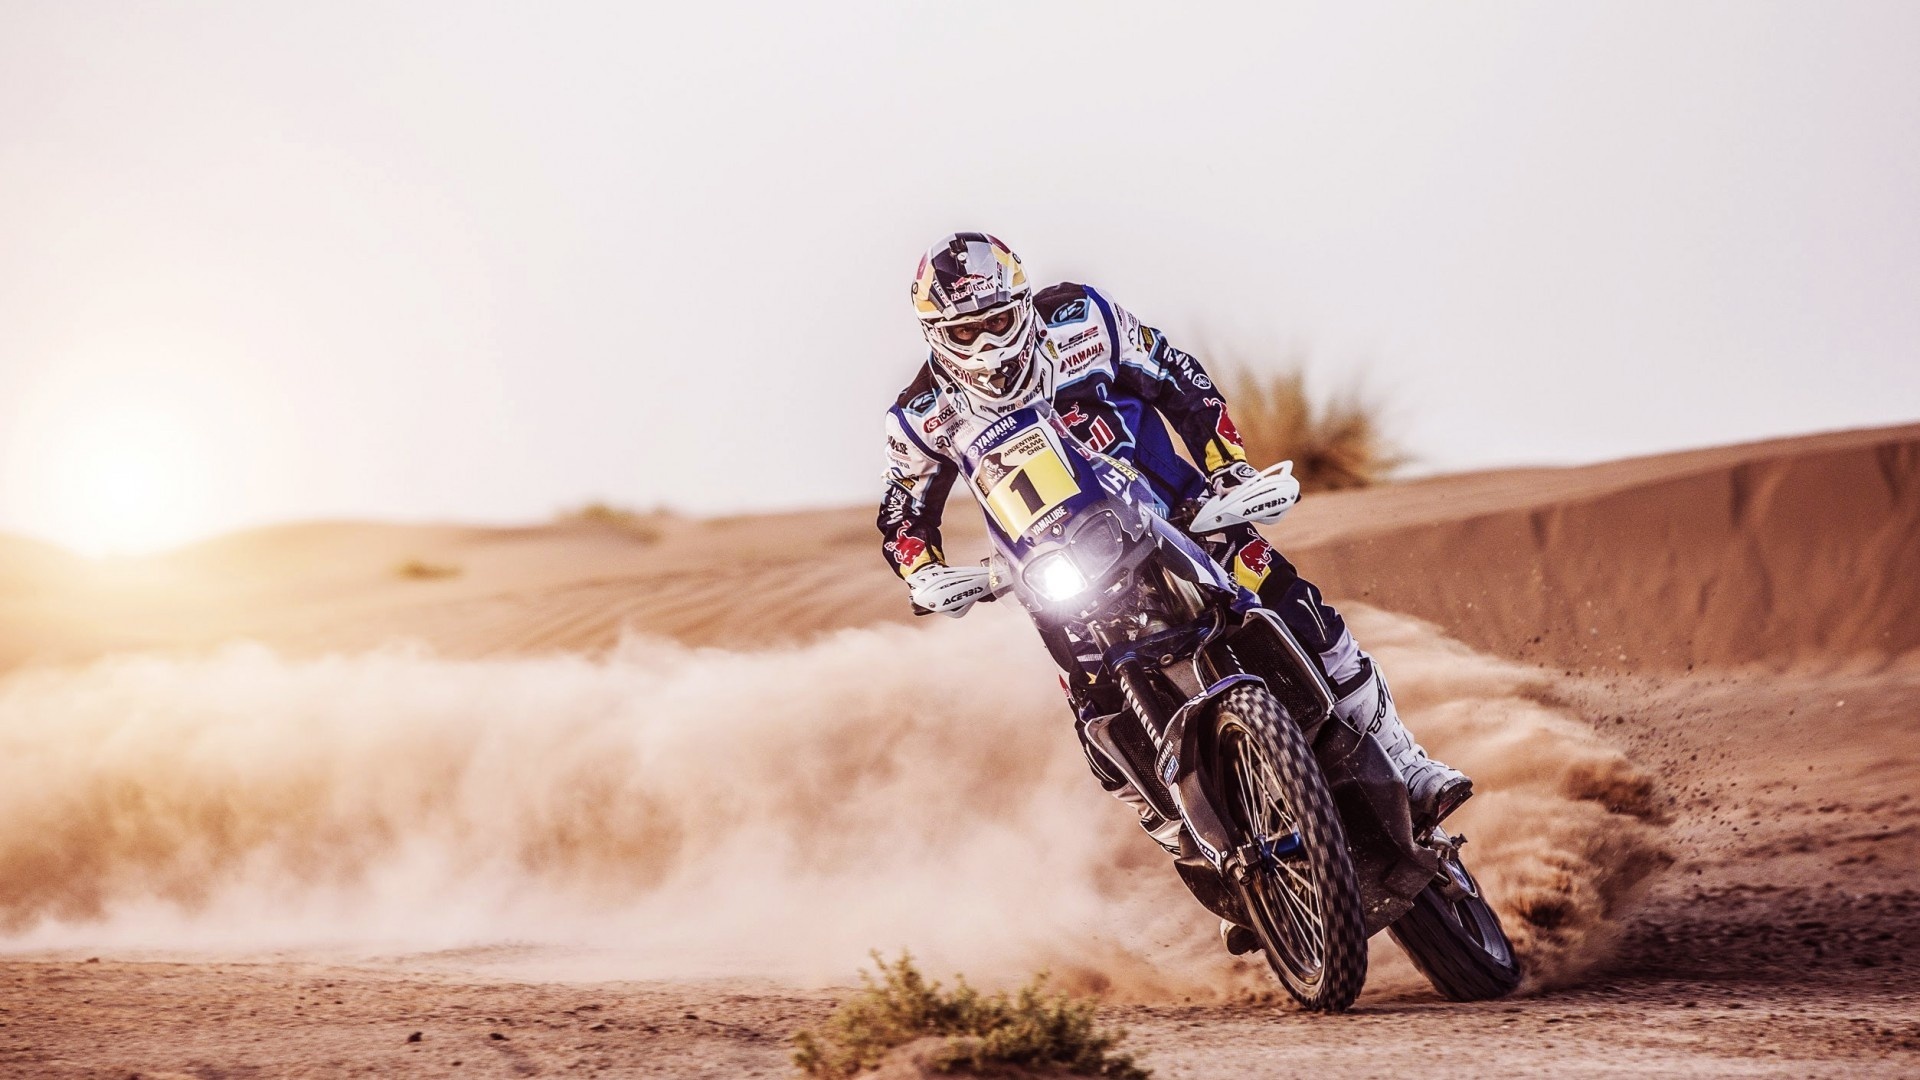 Motorcycle Racing: Pillars of Dust From Under the Wheels, Desert Pursuit, Riding the Dirt Bike Trail, Dakar. 1920x1080 Full HD Wallpaper.